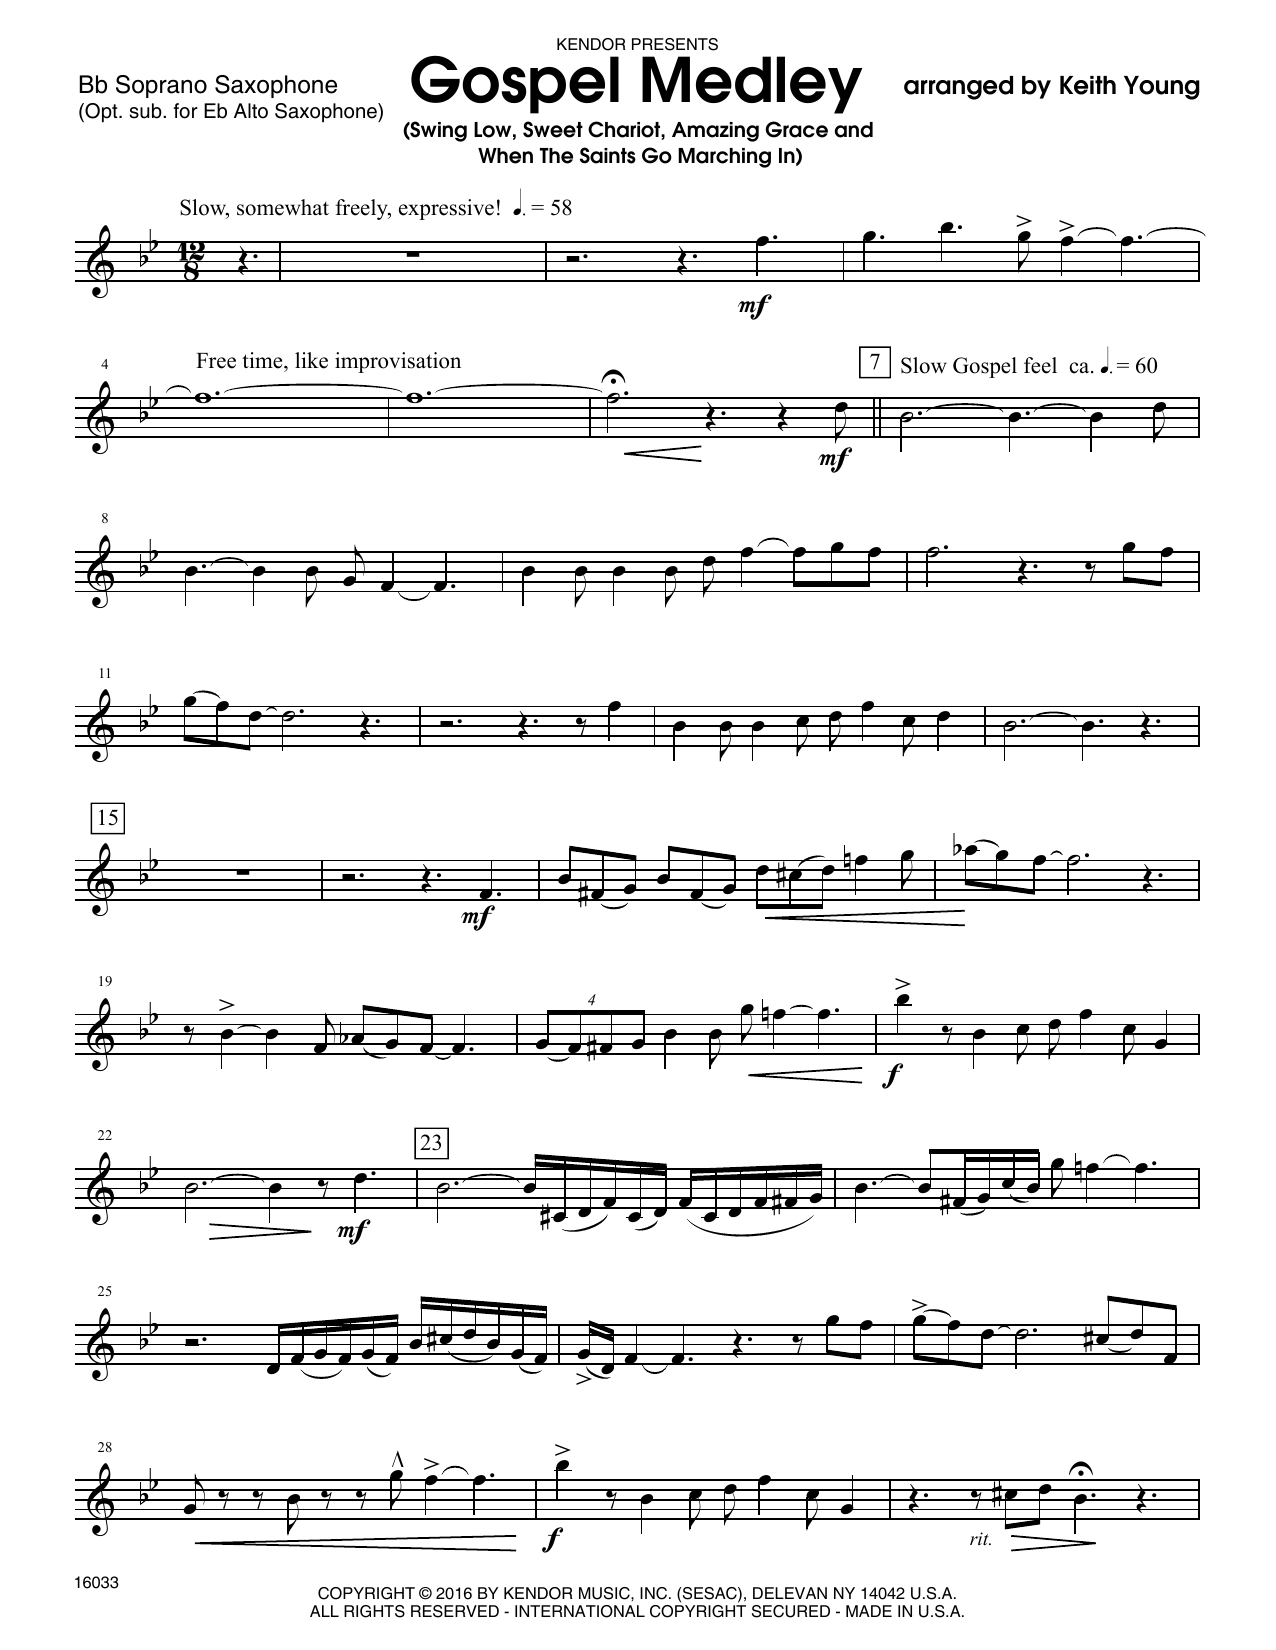 Download Keith Young Gospel Medley - Bb Soprano Sax Sheet Music